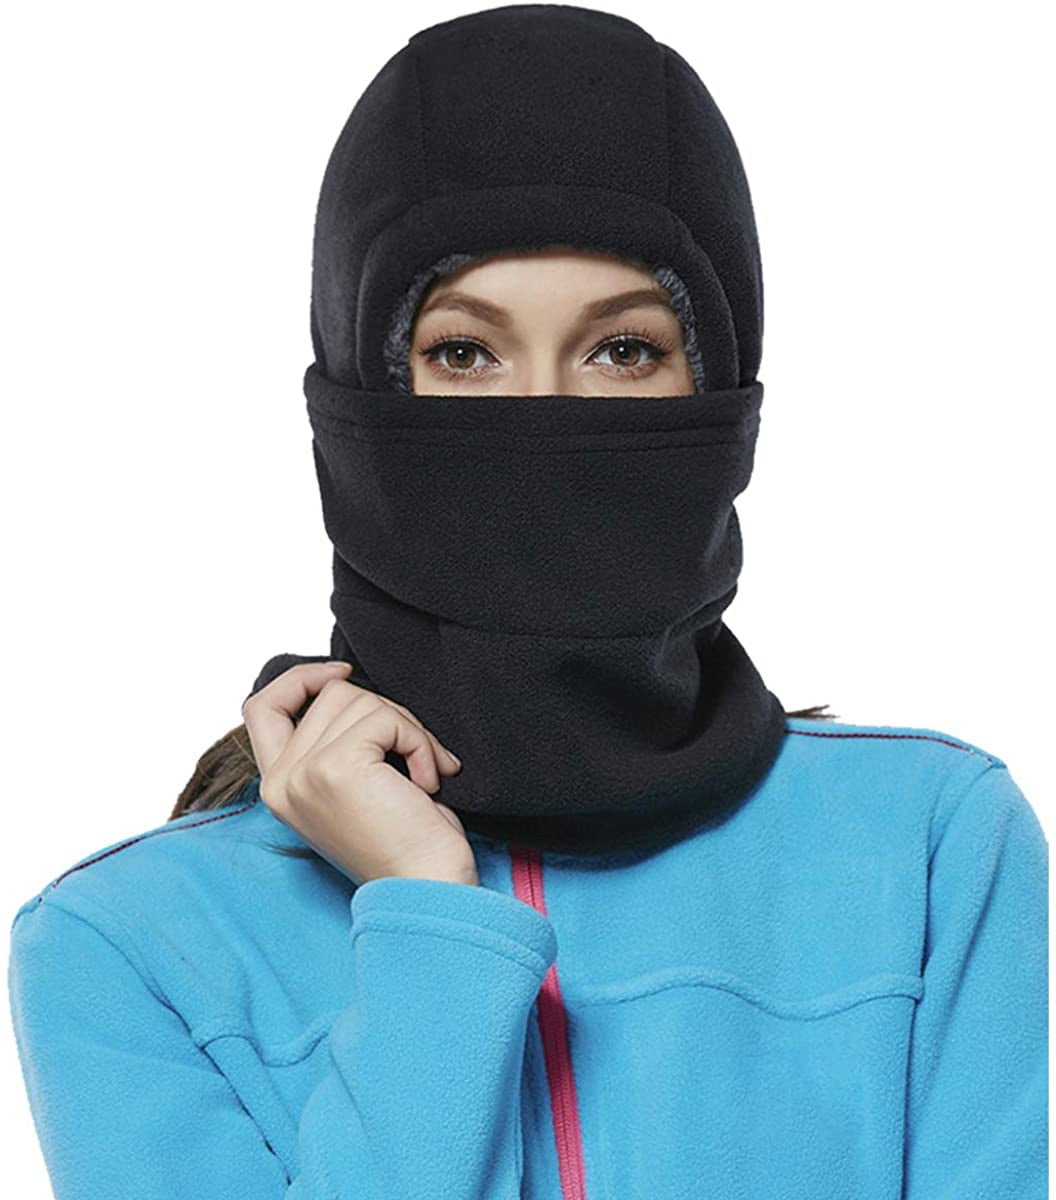 Kids Warm Winter Double Layer Fleece Windproof Balaclava Ski Face Mask Hat Caps